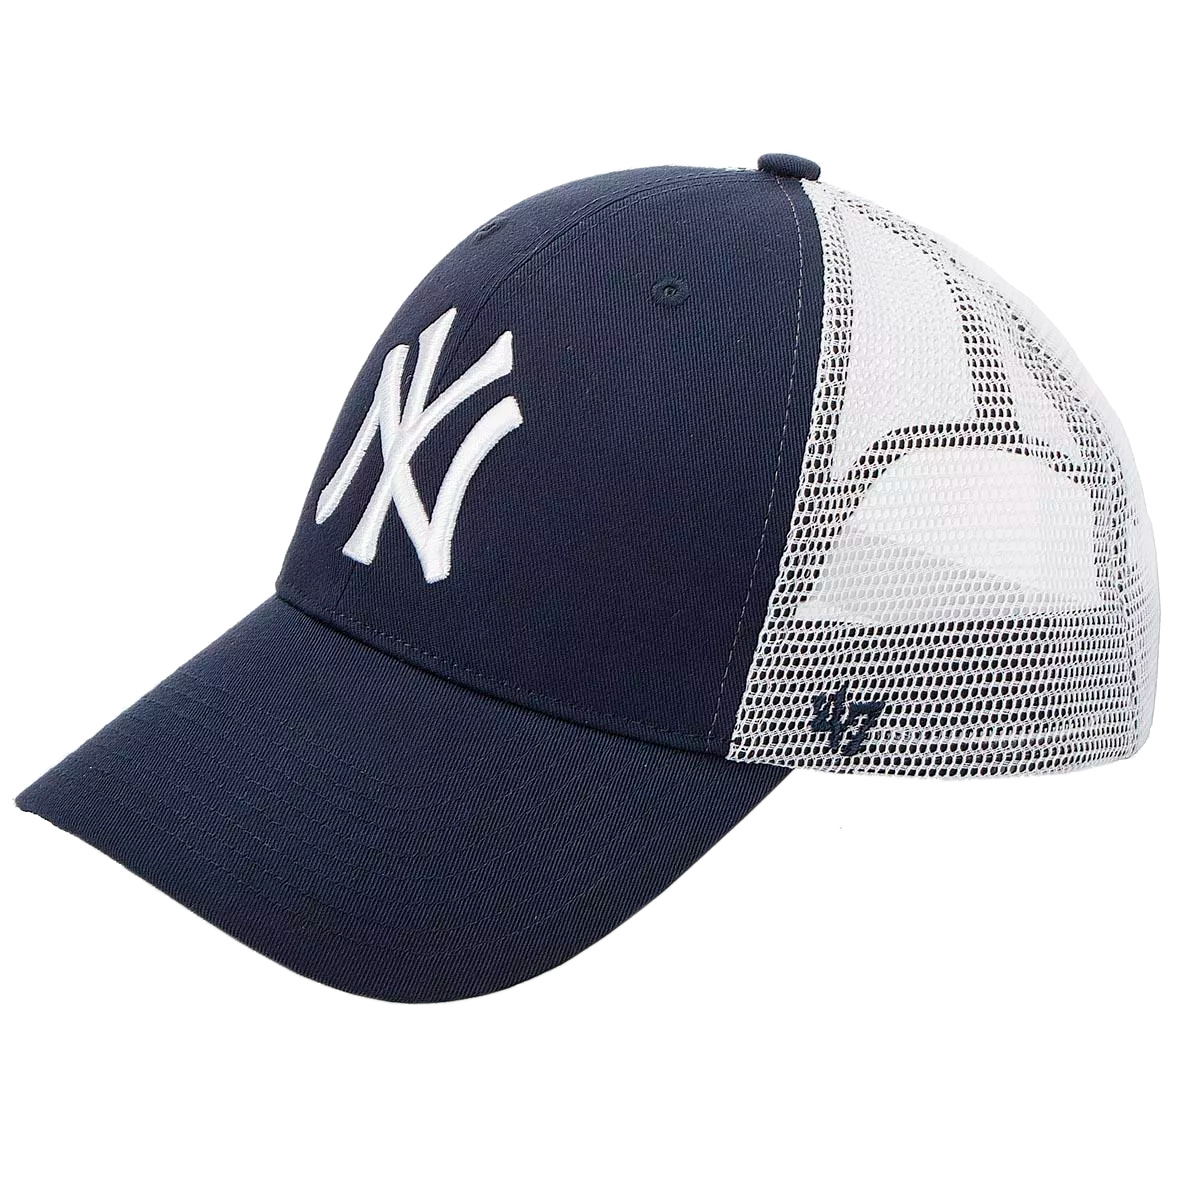 New York Yankees baseball hat